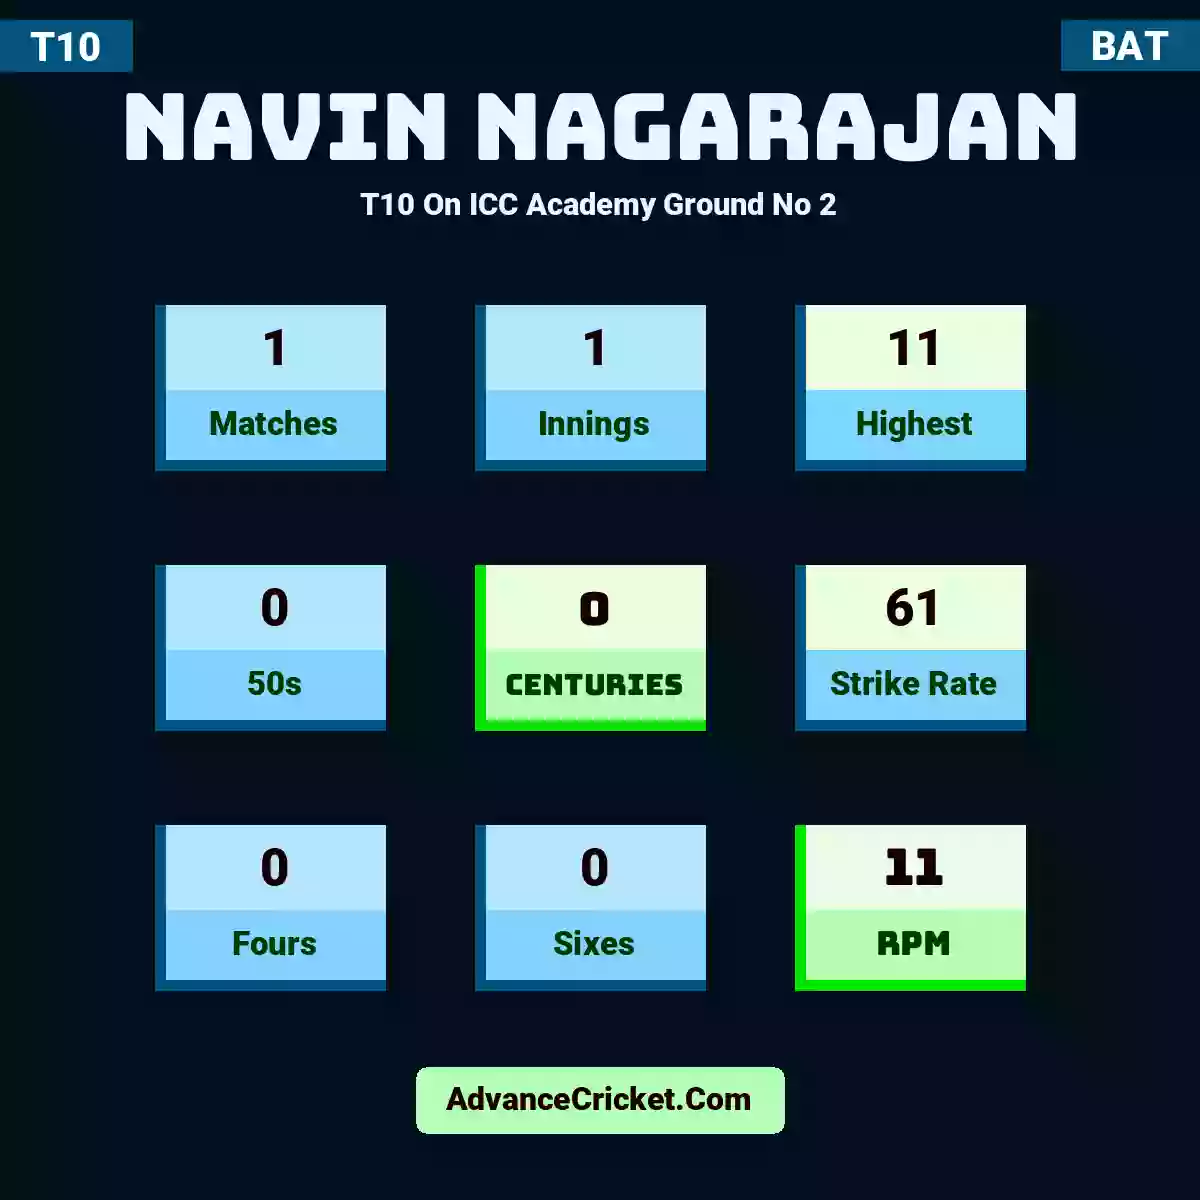 Navin Nagarajan T10  On ICC Academy Ground No 2, Navin Nagarajan played 1 matches, scored 11 runs as highest, 0 half-centuries, and 0 centuries, with a strike rate of 61. N.Nagarajan hit 0 fours and 0 sixes, with an RPM of 11.